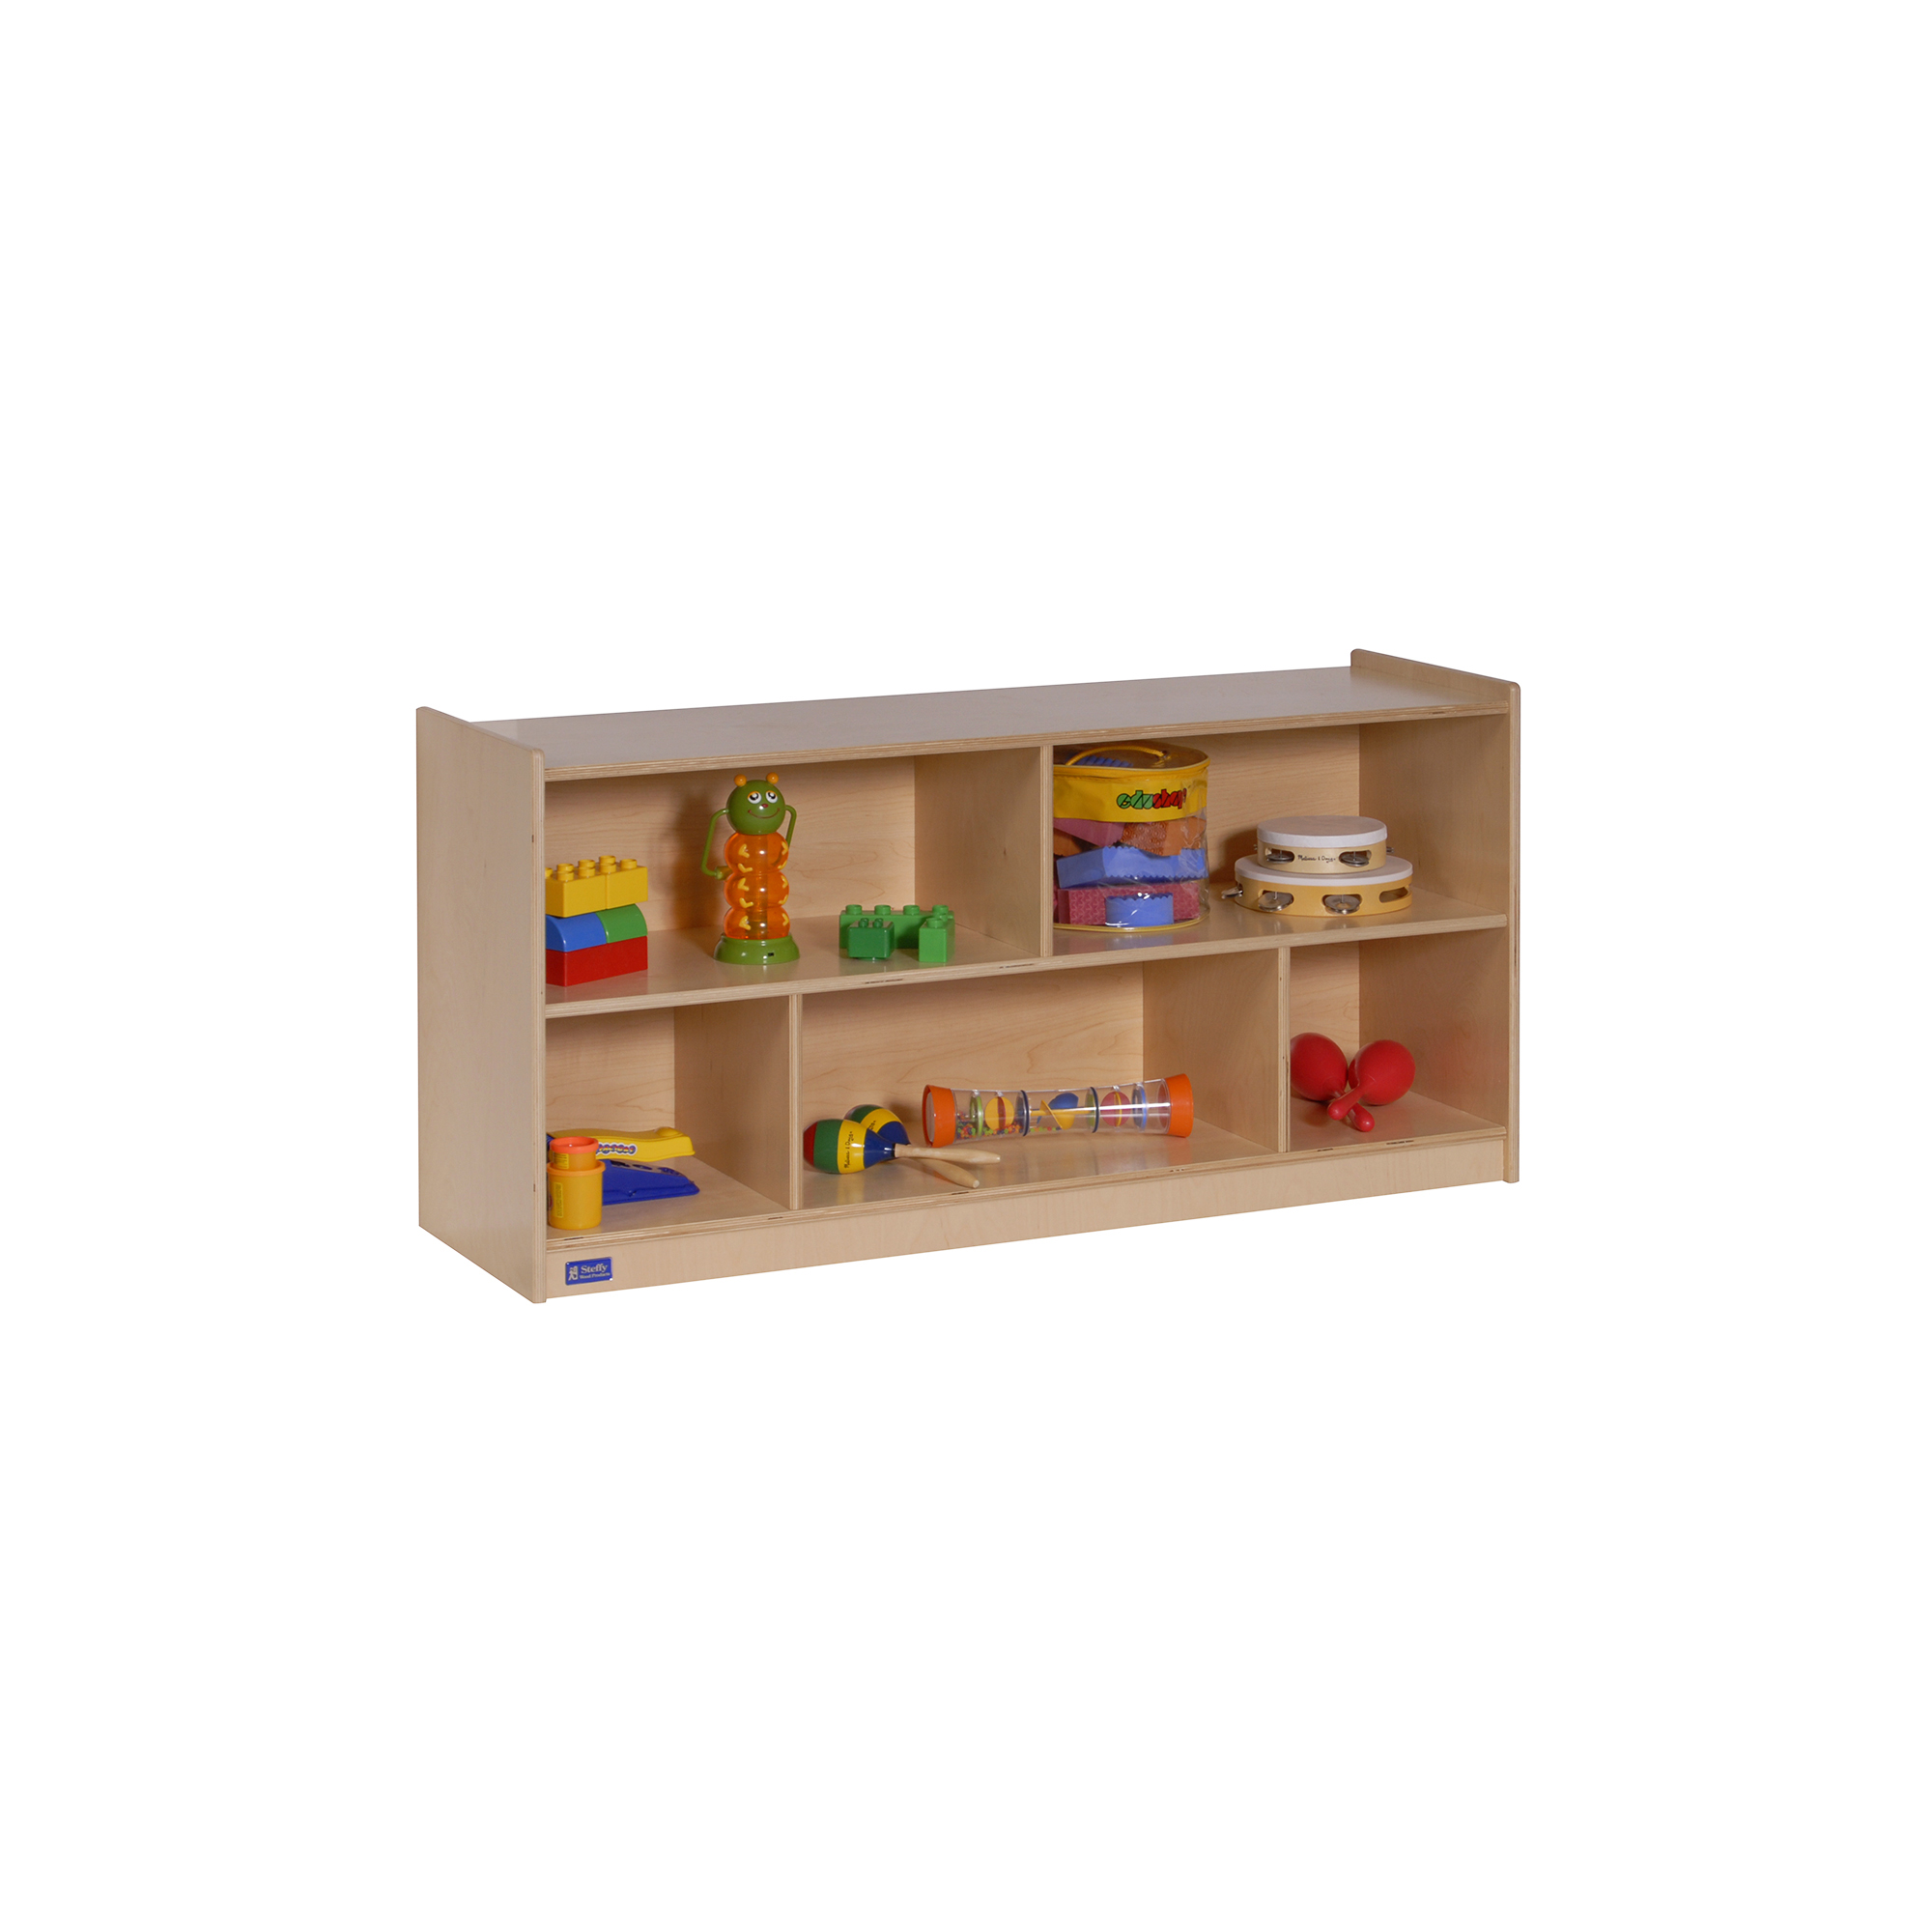 61 cm H Single Toddler 2-Shelf Mobile Storage